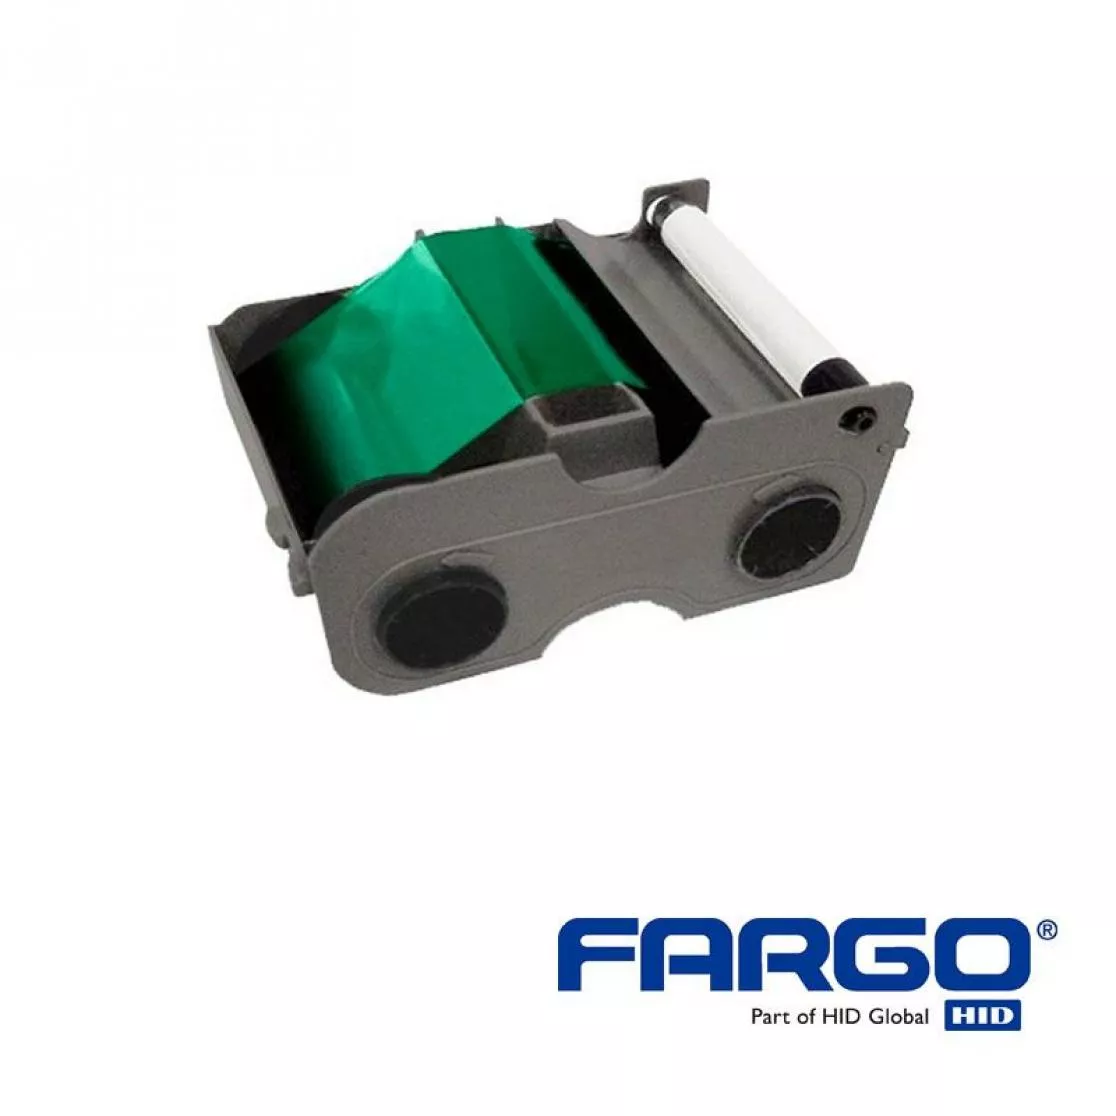 Green film for card printer HID Fargo DTC1250e